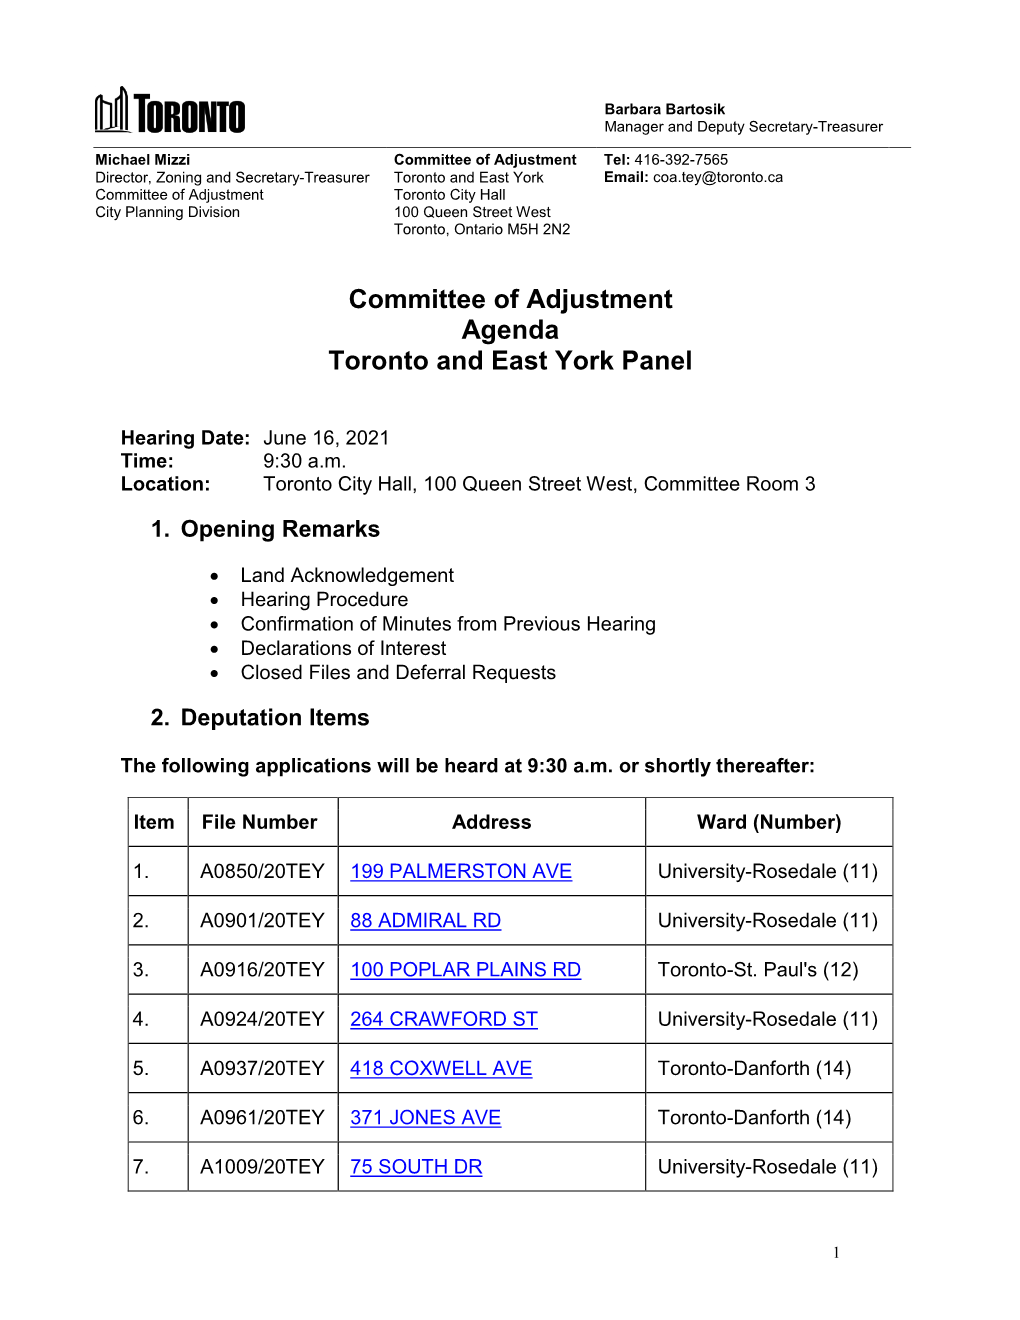 Committee of Adjustment Toronto and East York, Hearing Agenda, June